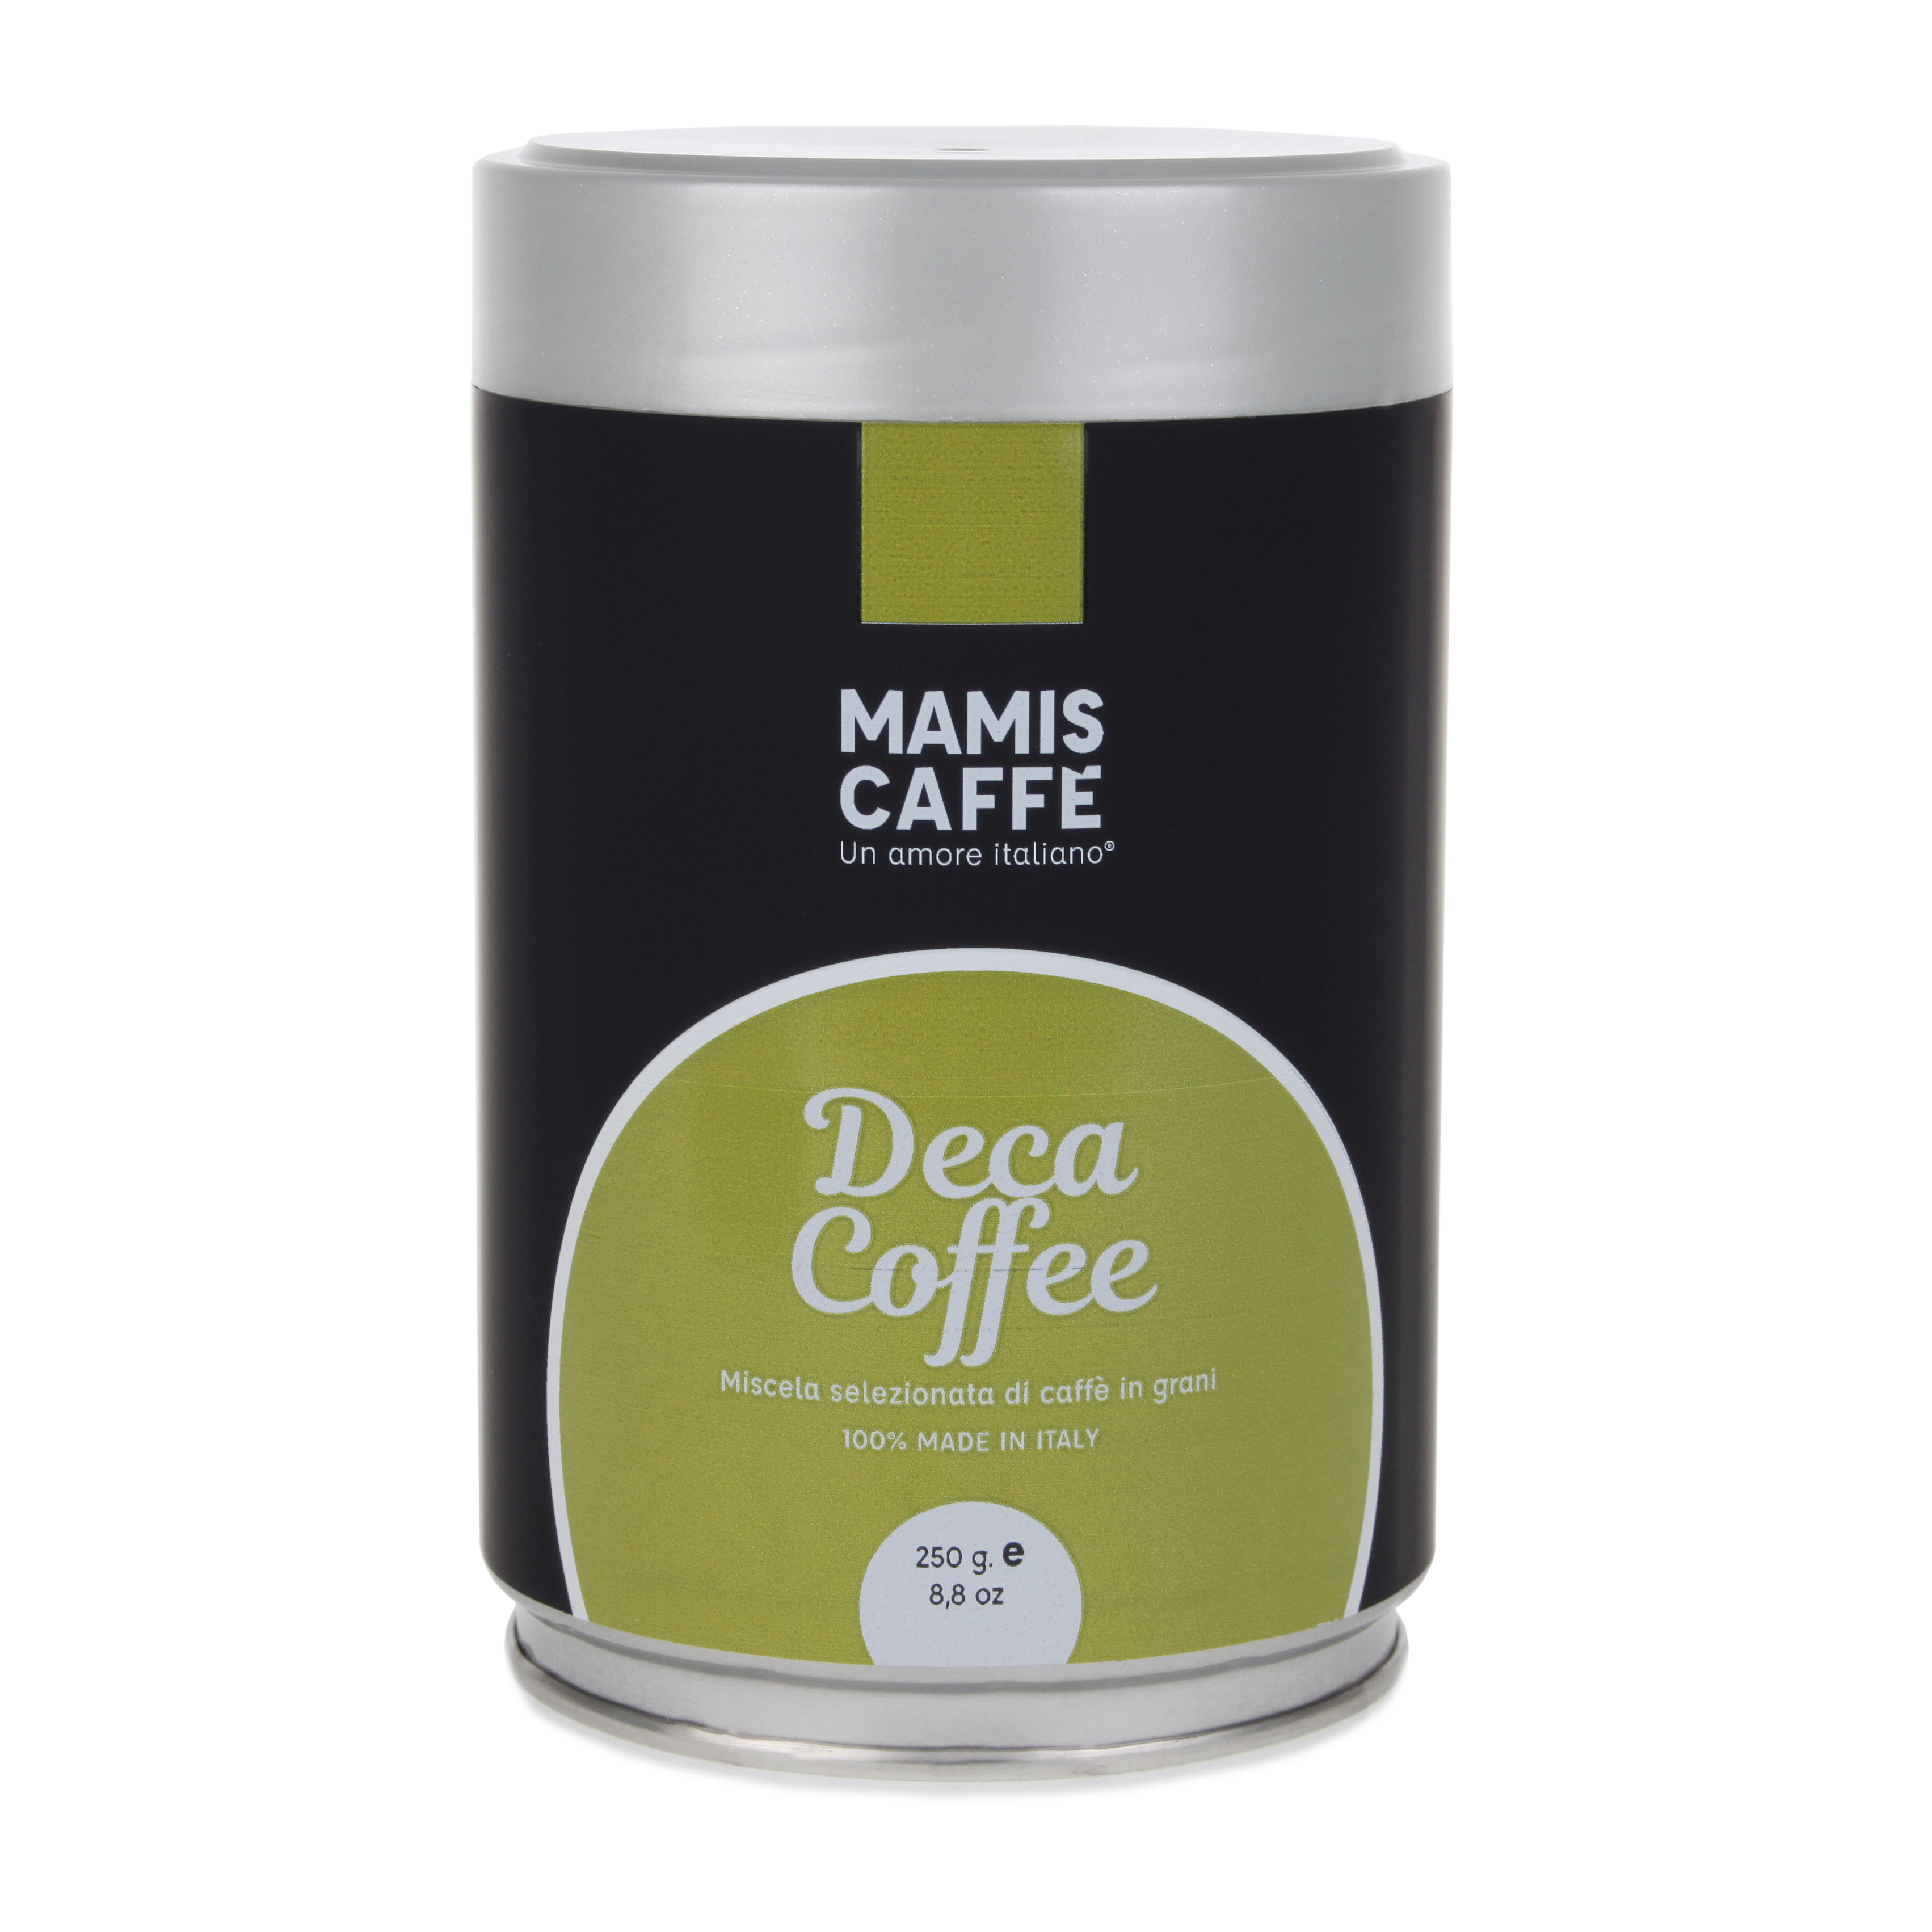 Mamis Caffè Deca Coffee